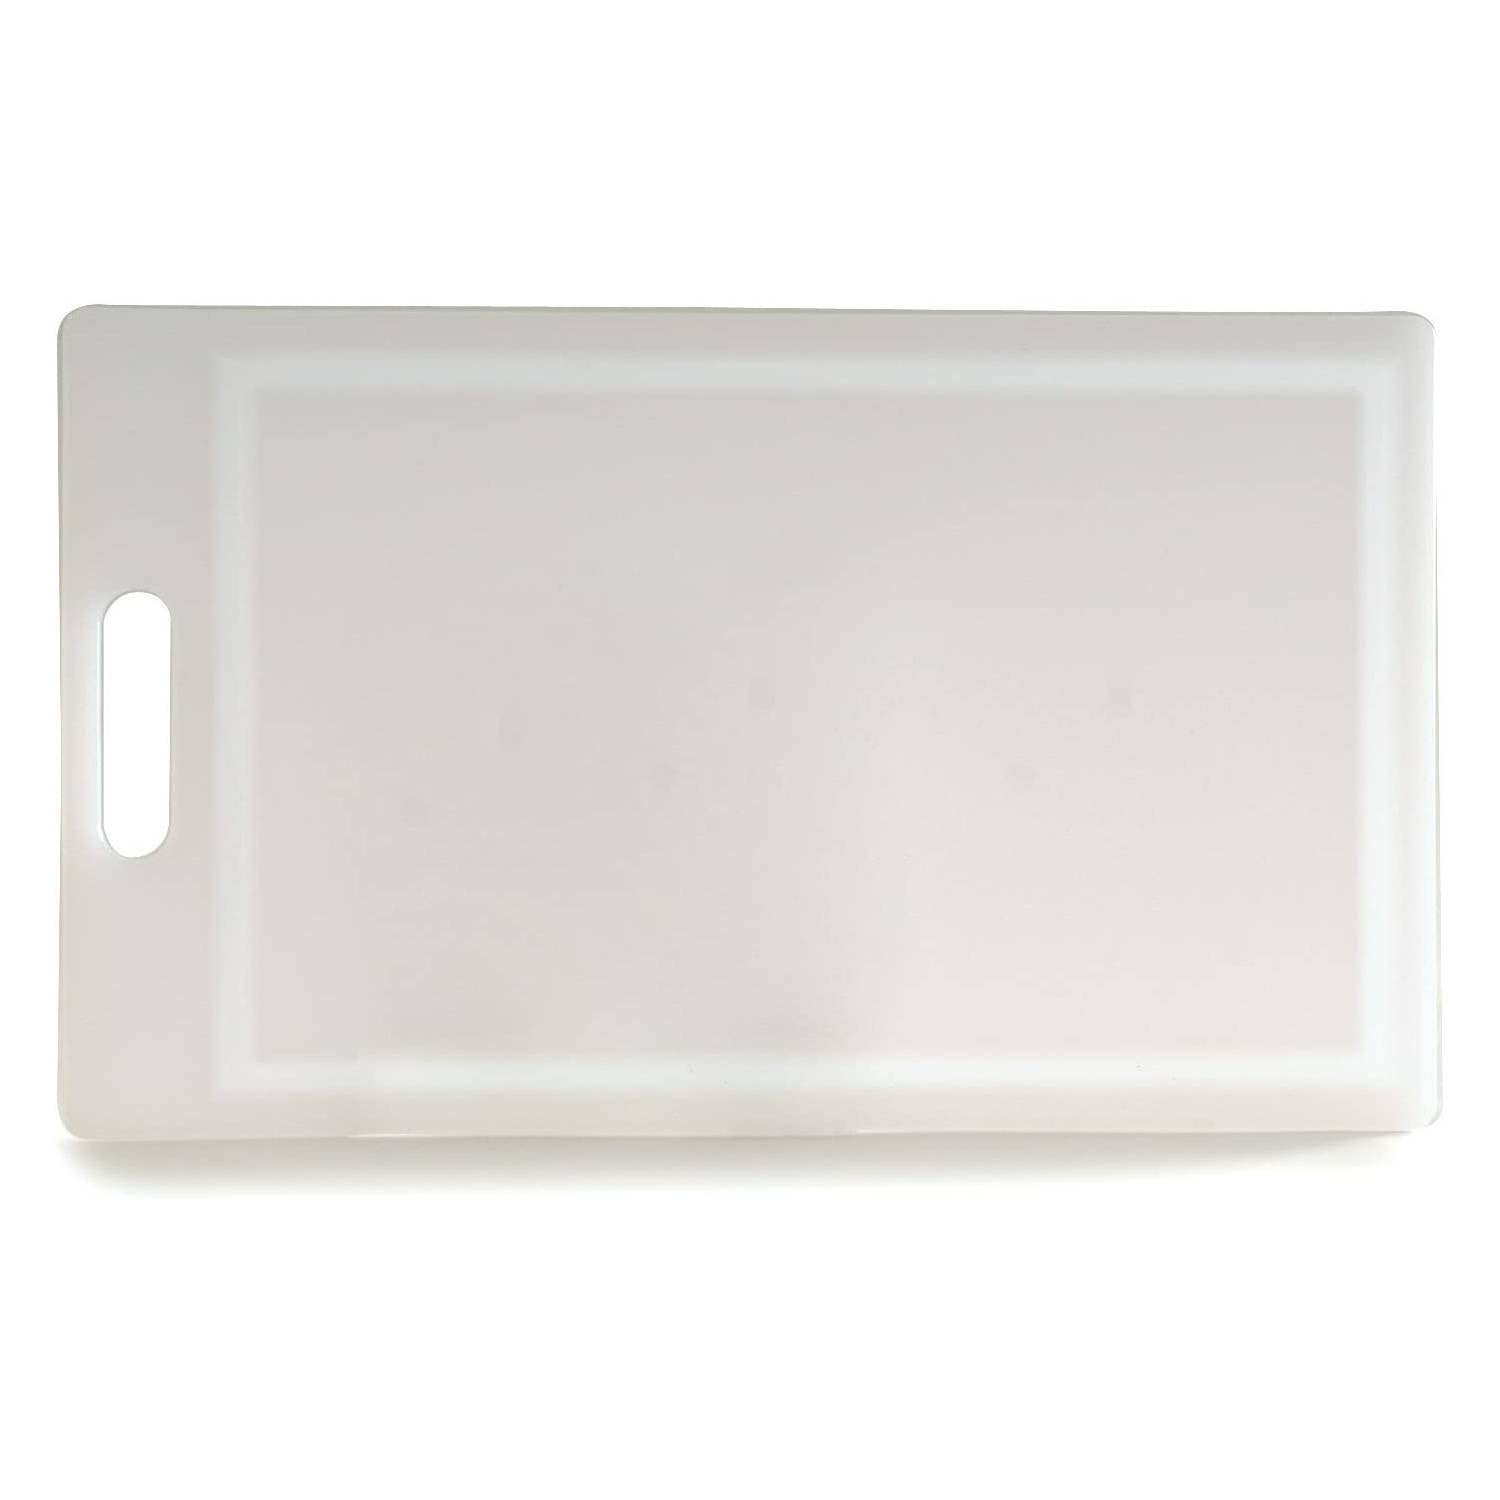 Thunder Group 15 x 9 x 1/2 White Polyethylene Cutting Board with Handle